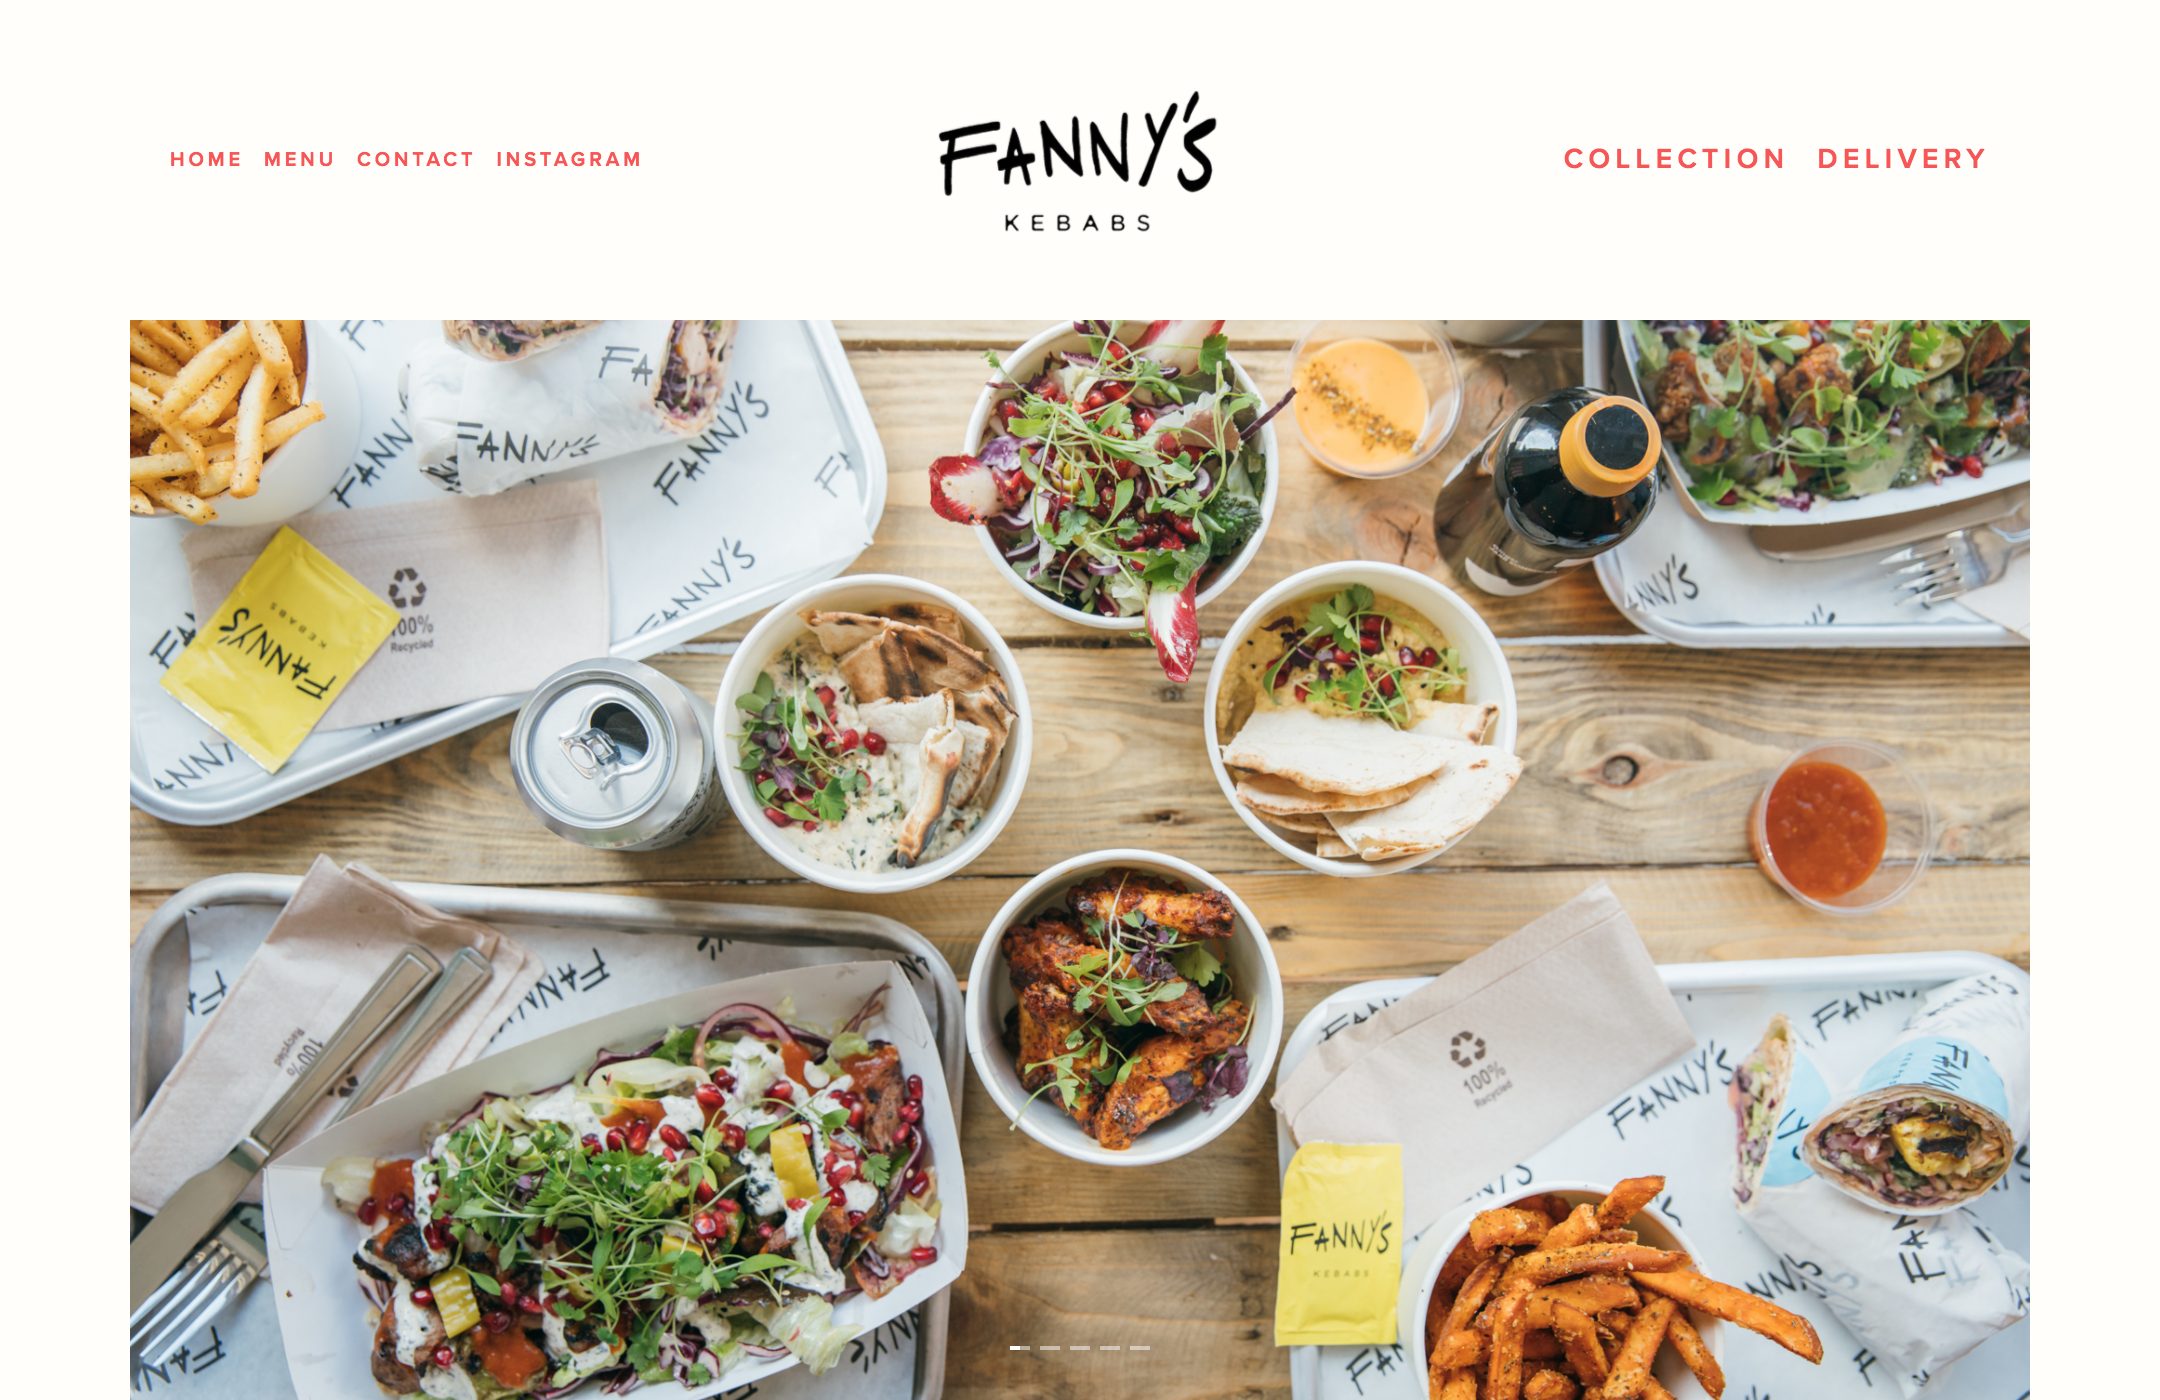 Food web design